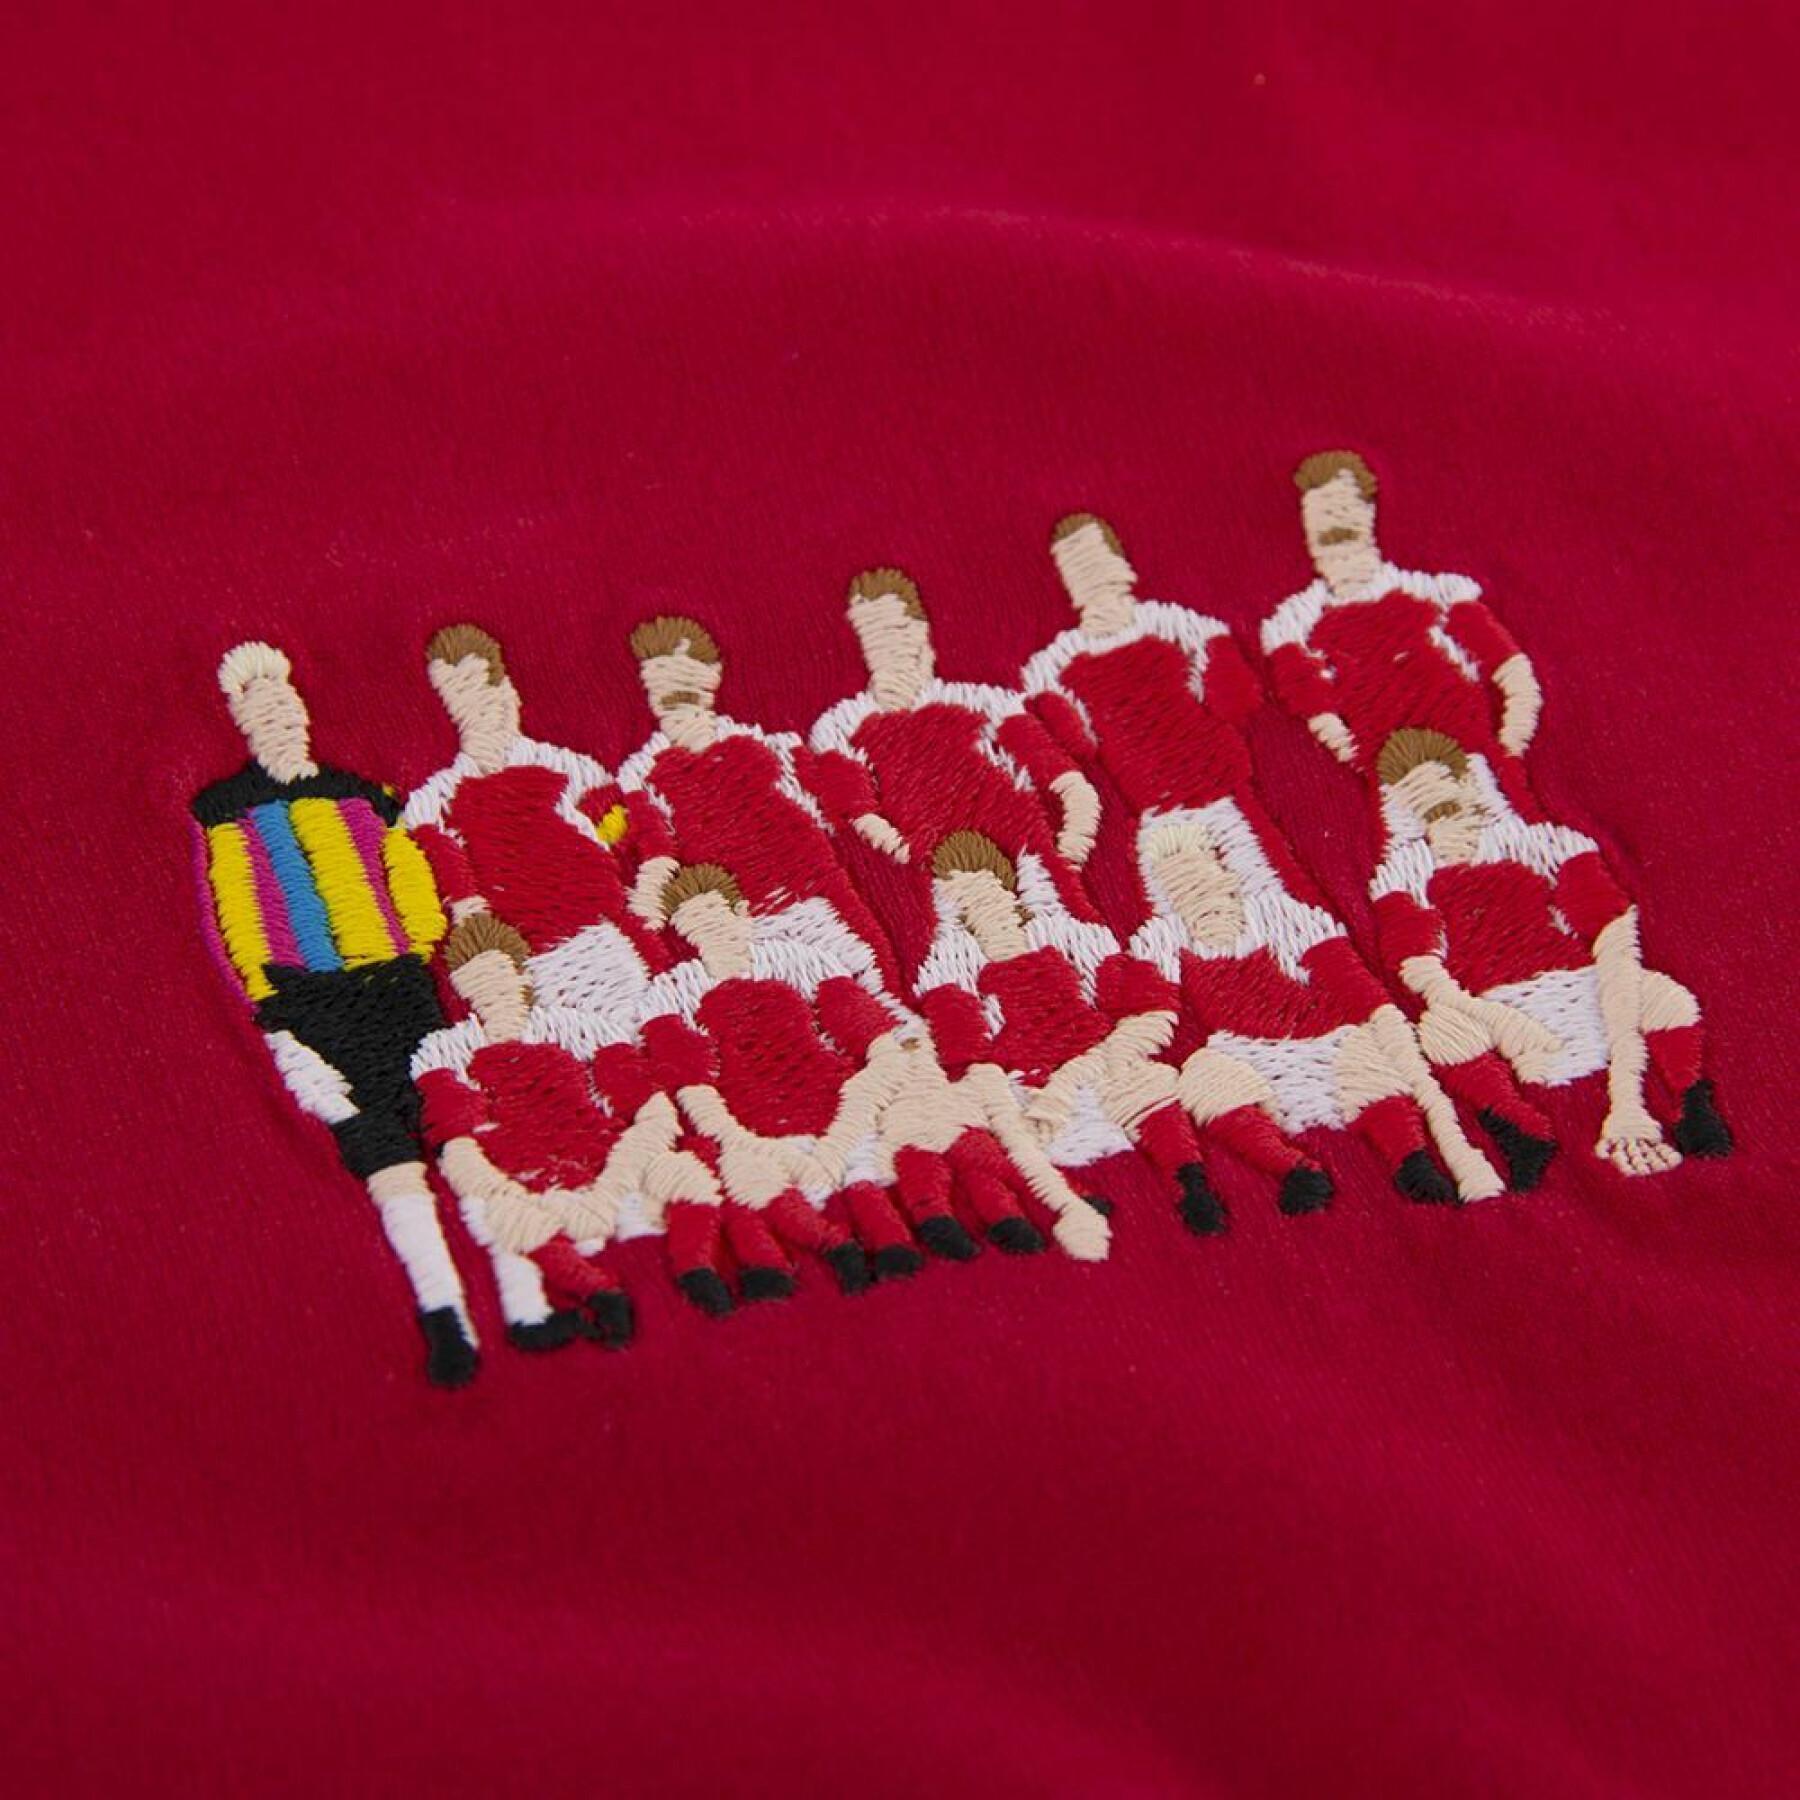 T-shirt Danemark Campeões europeus 1992